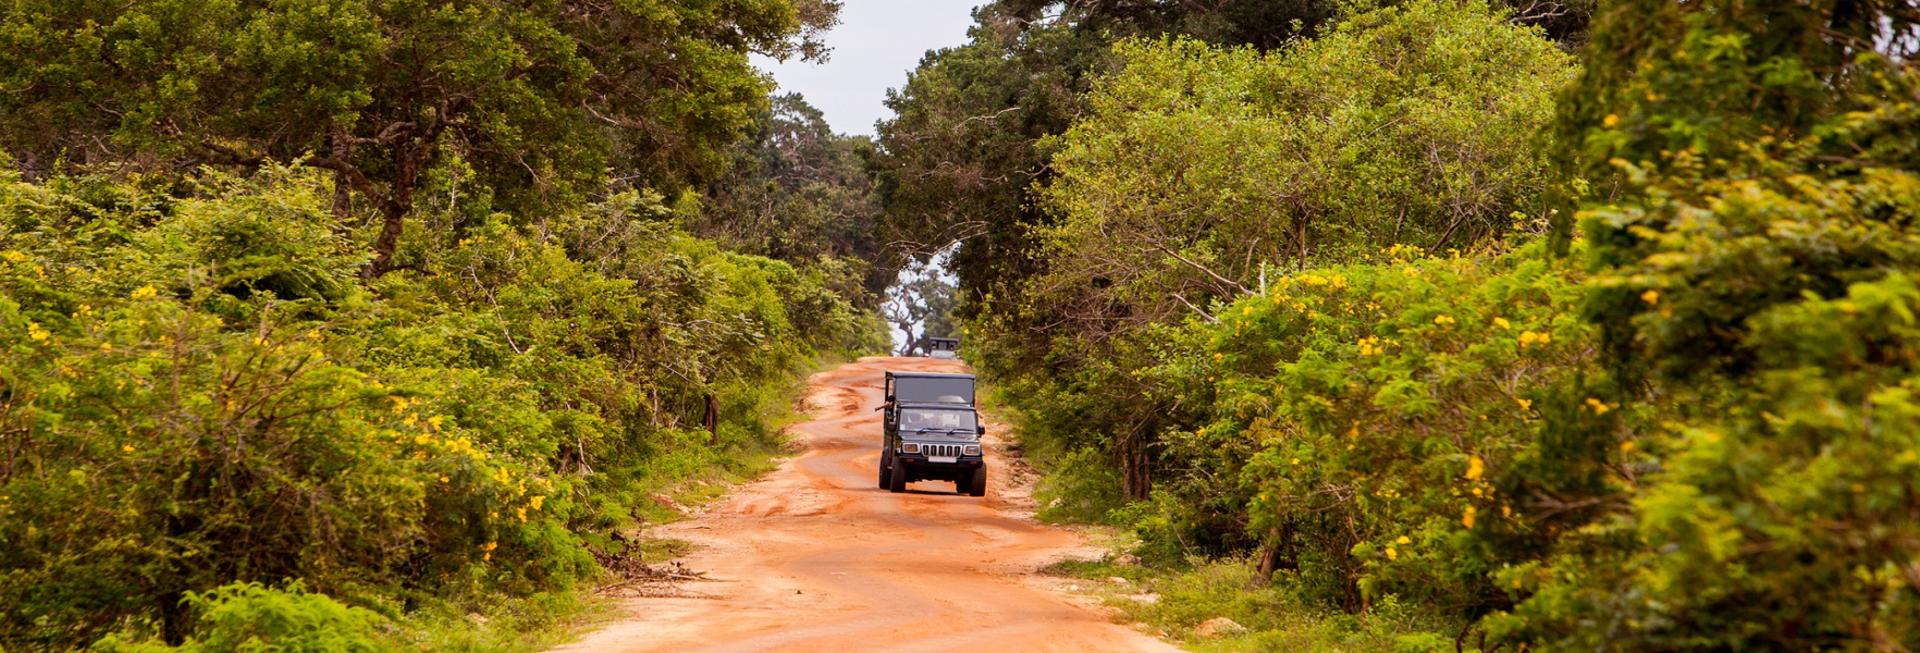 Jeep Safari, Minneriya National Park, Sri Lanka